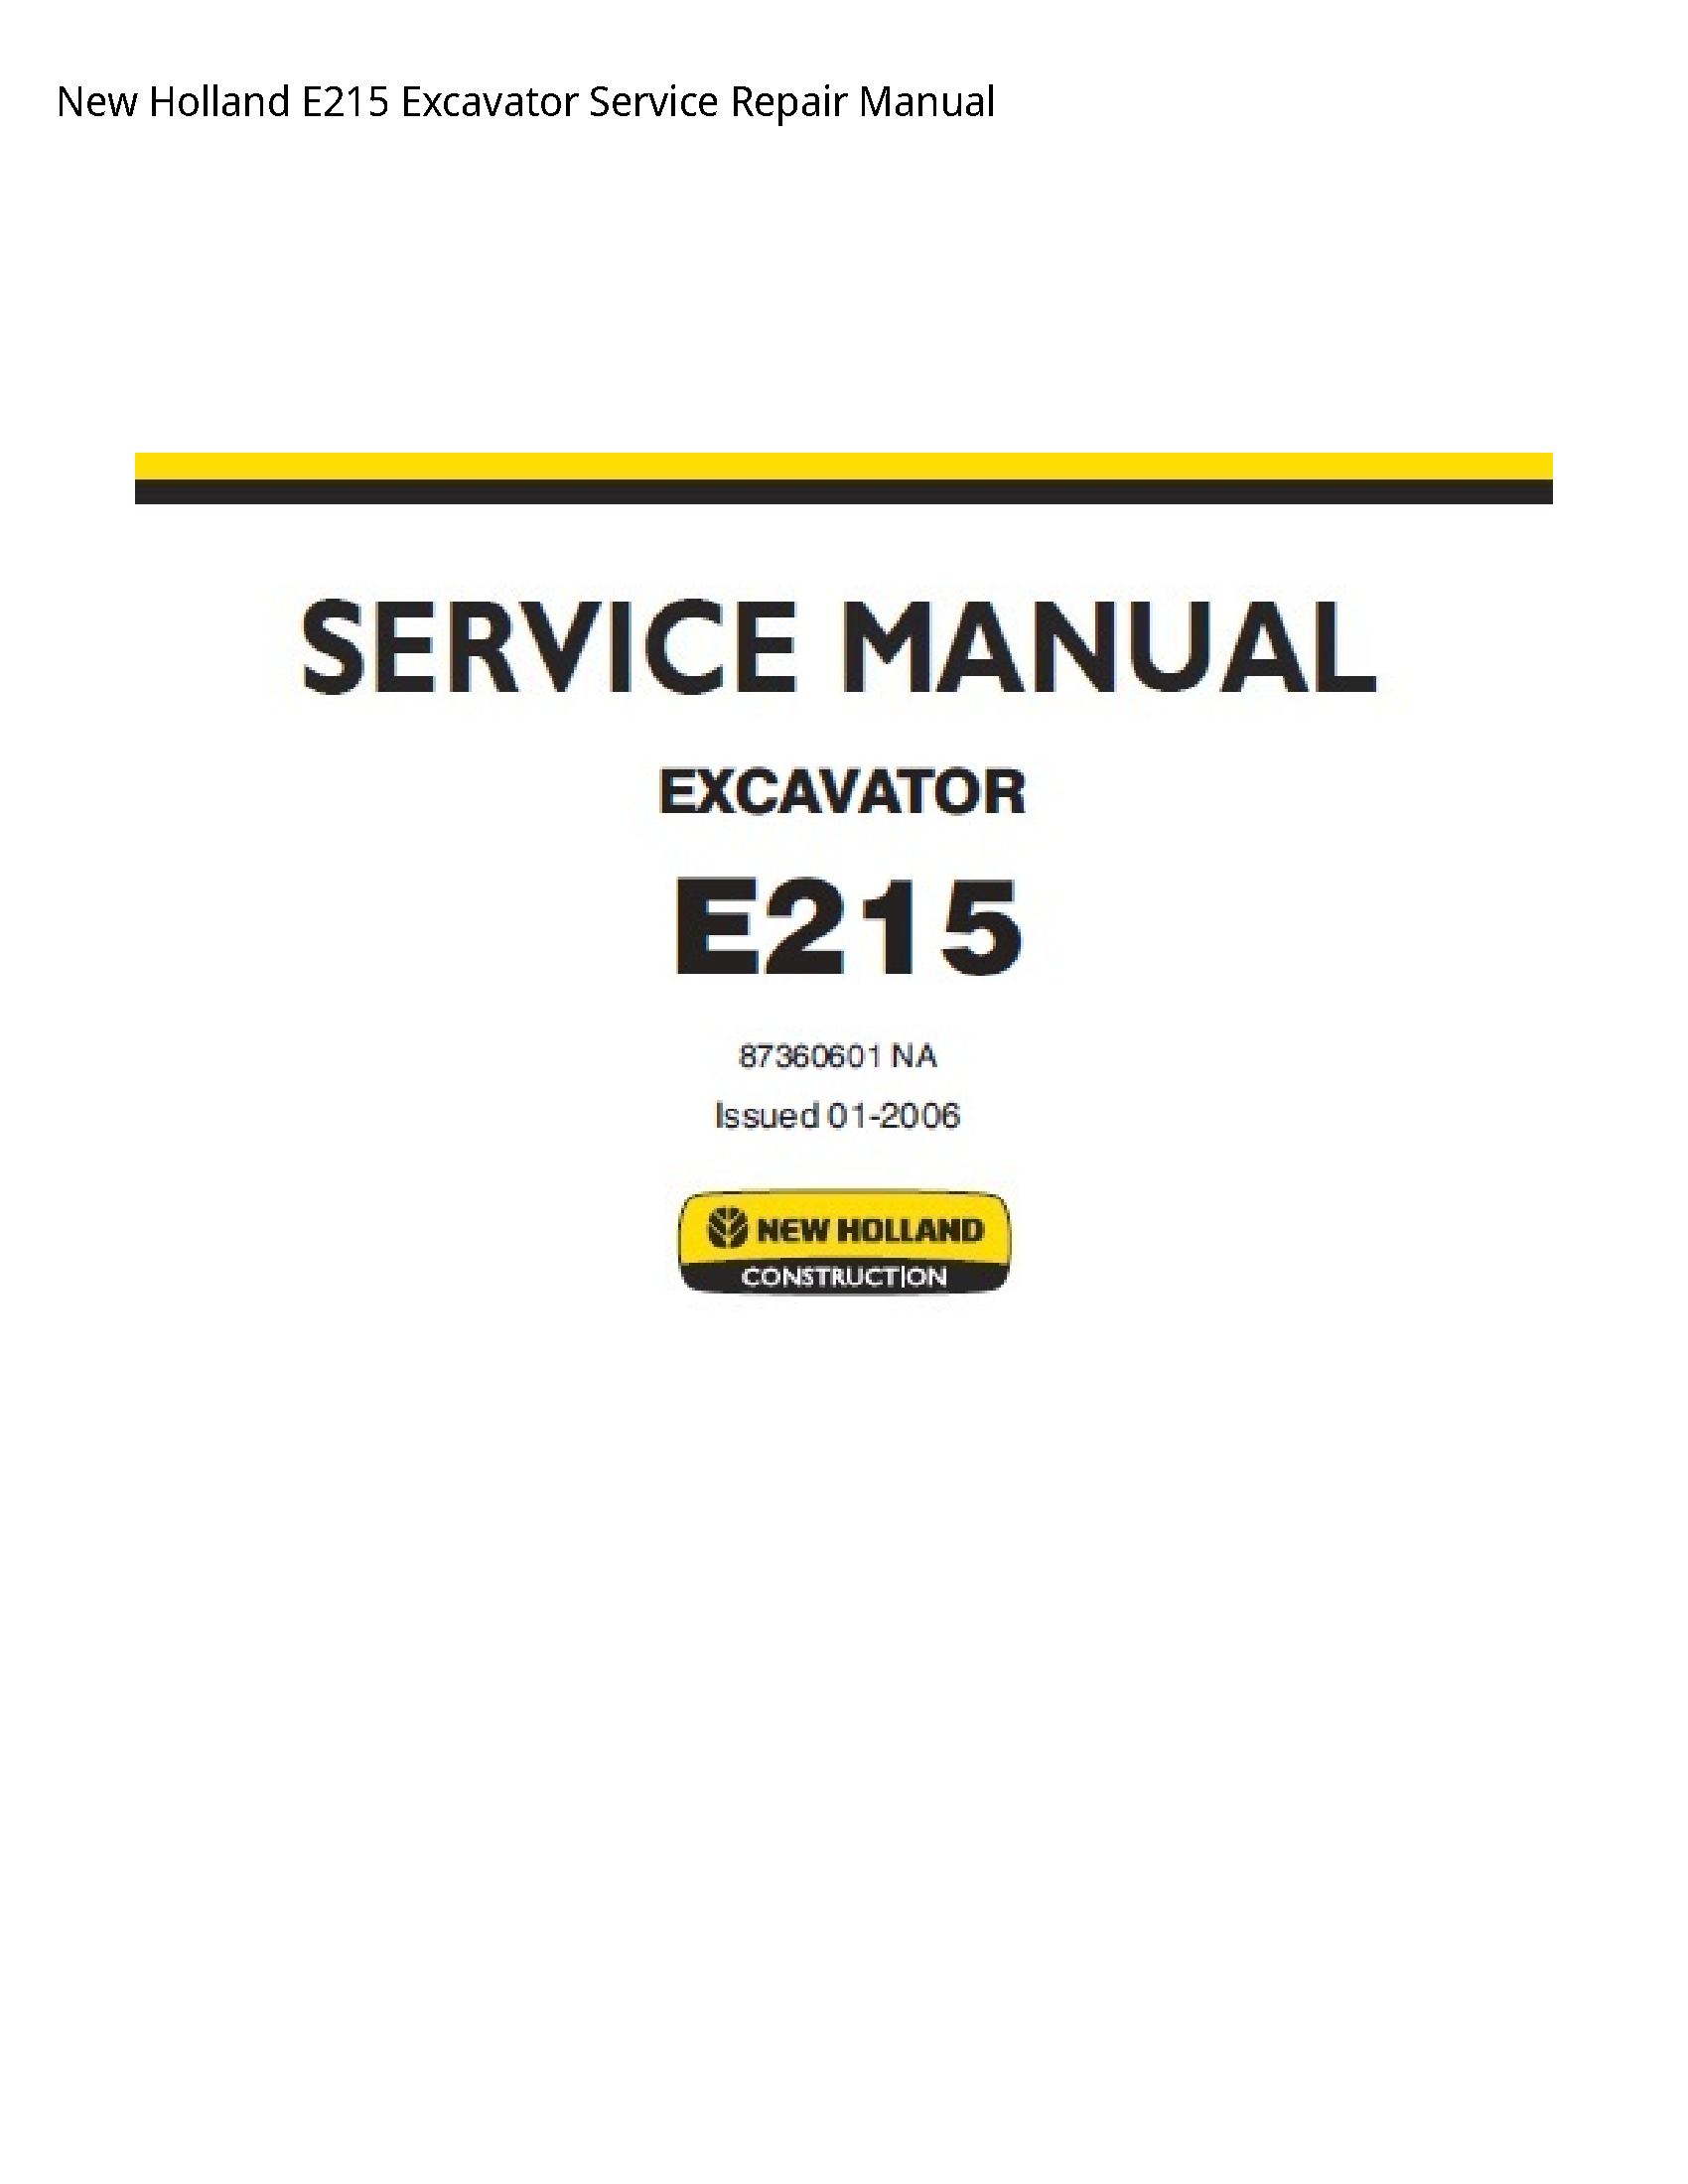 New Holland E215 Excavator manual